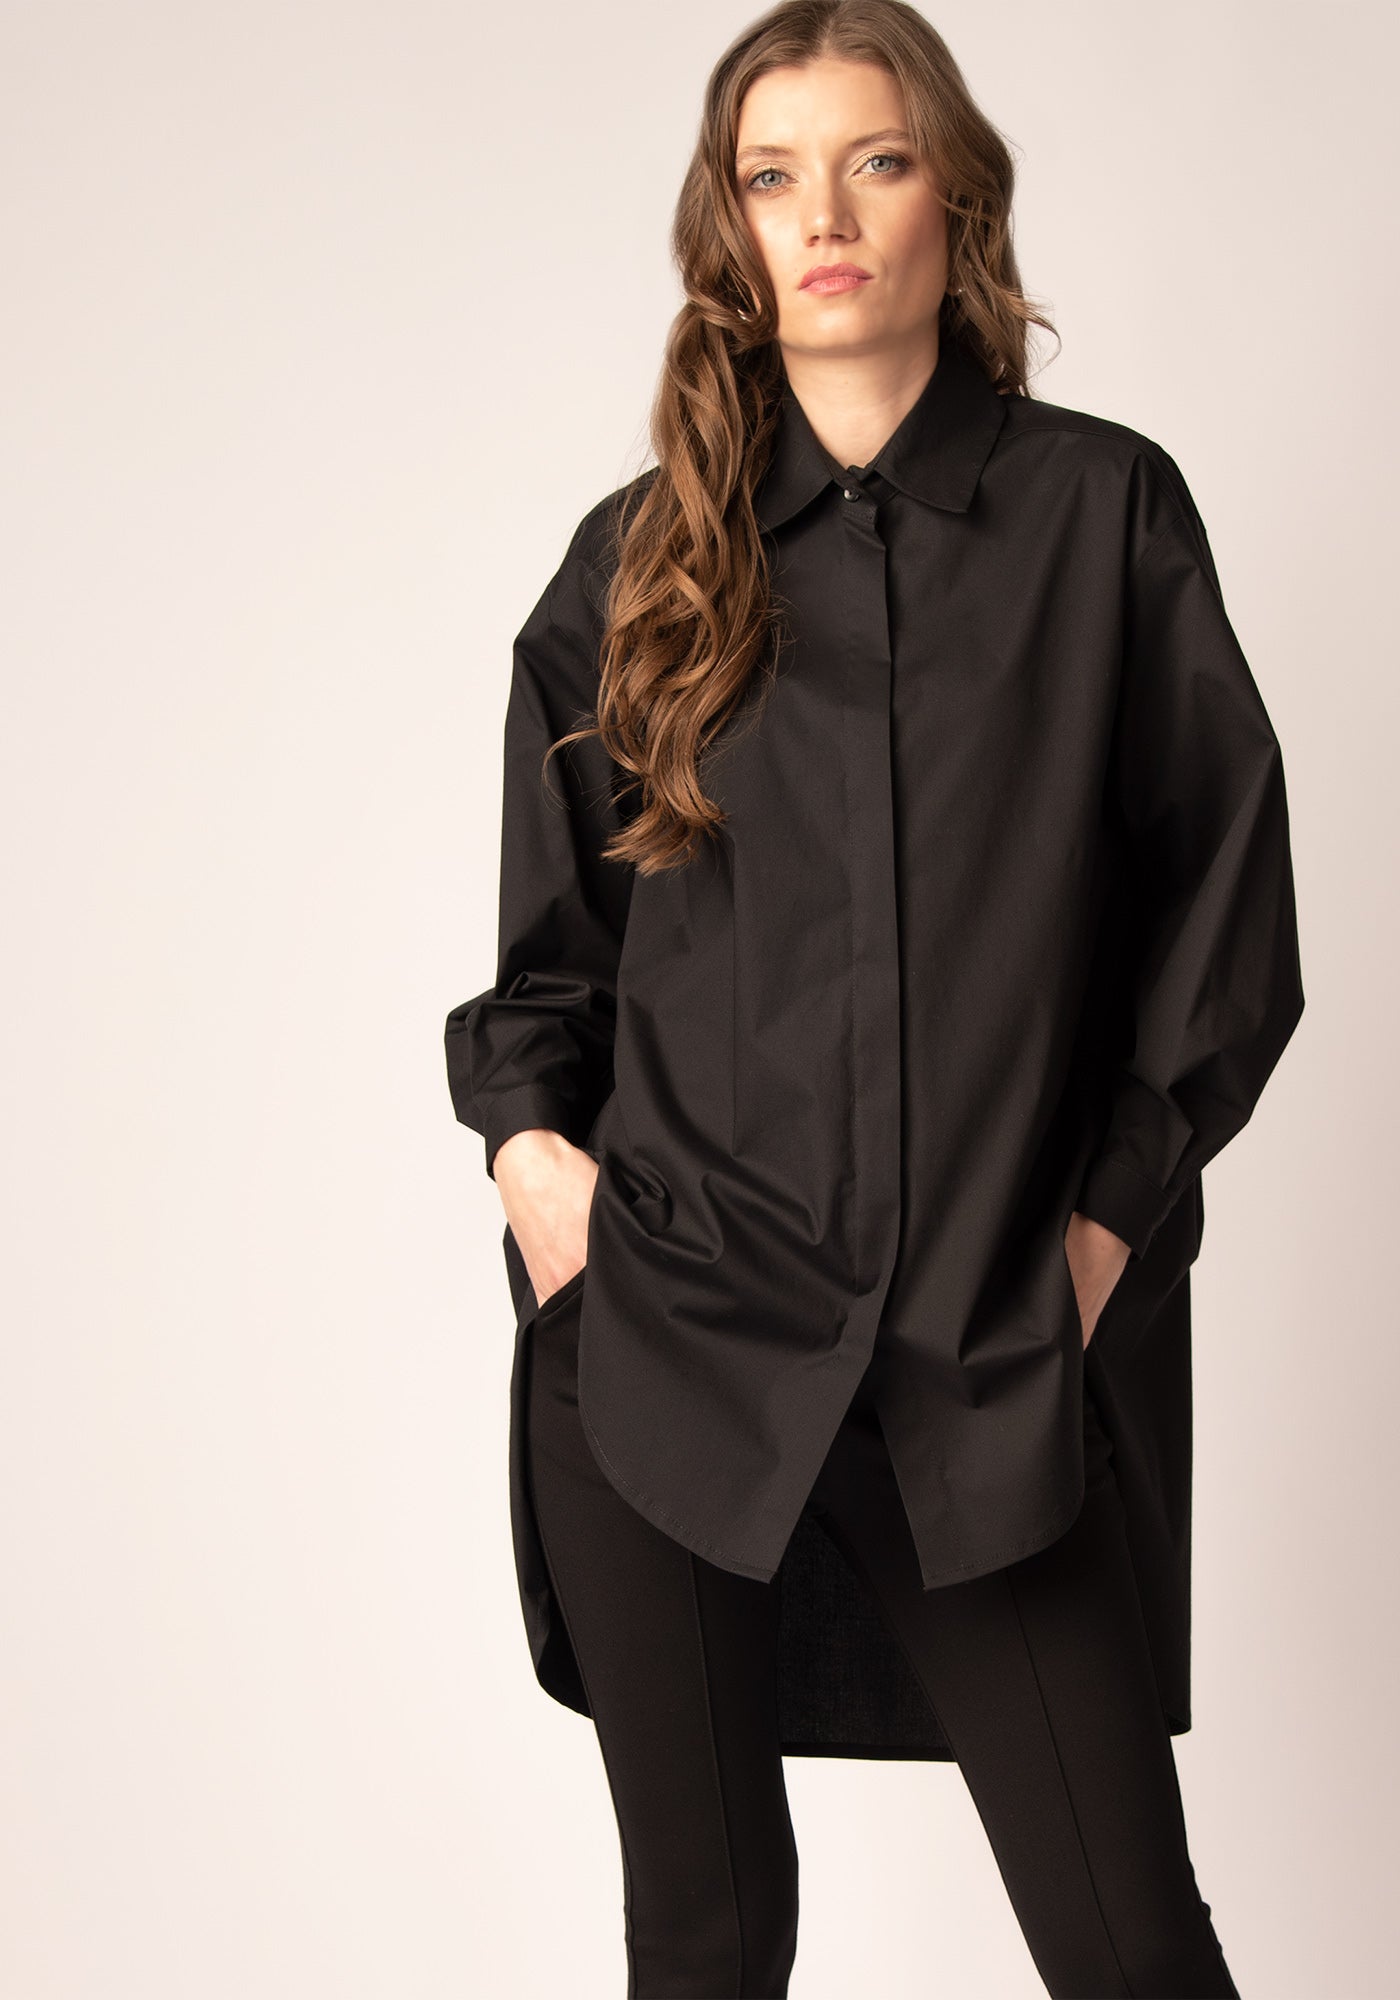 Women's Oversized Button up Shirt in Black Cotton Poplin